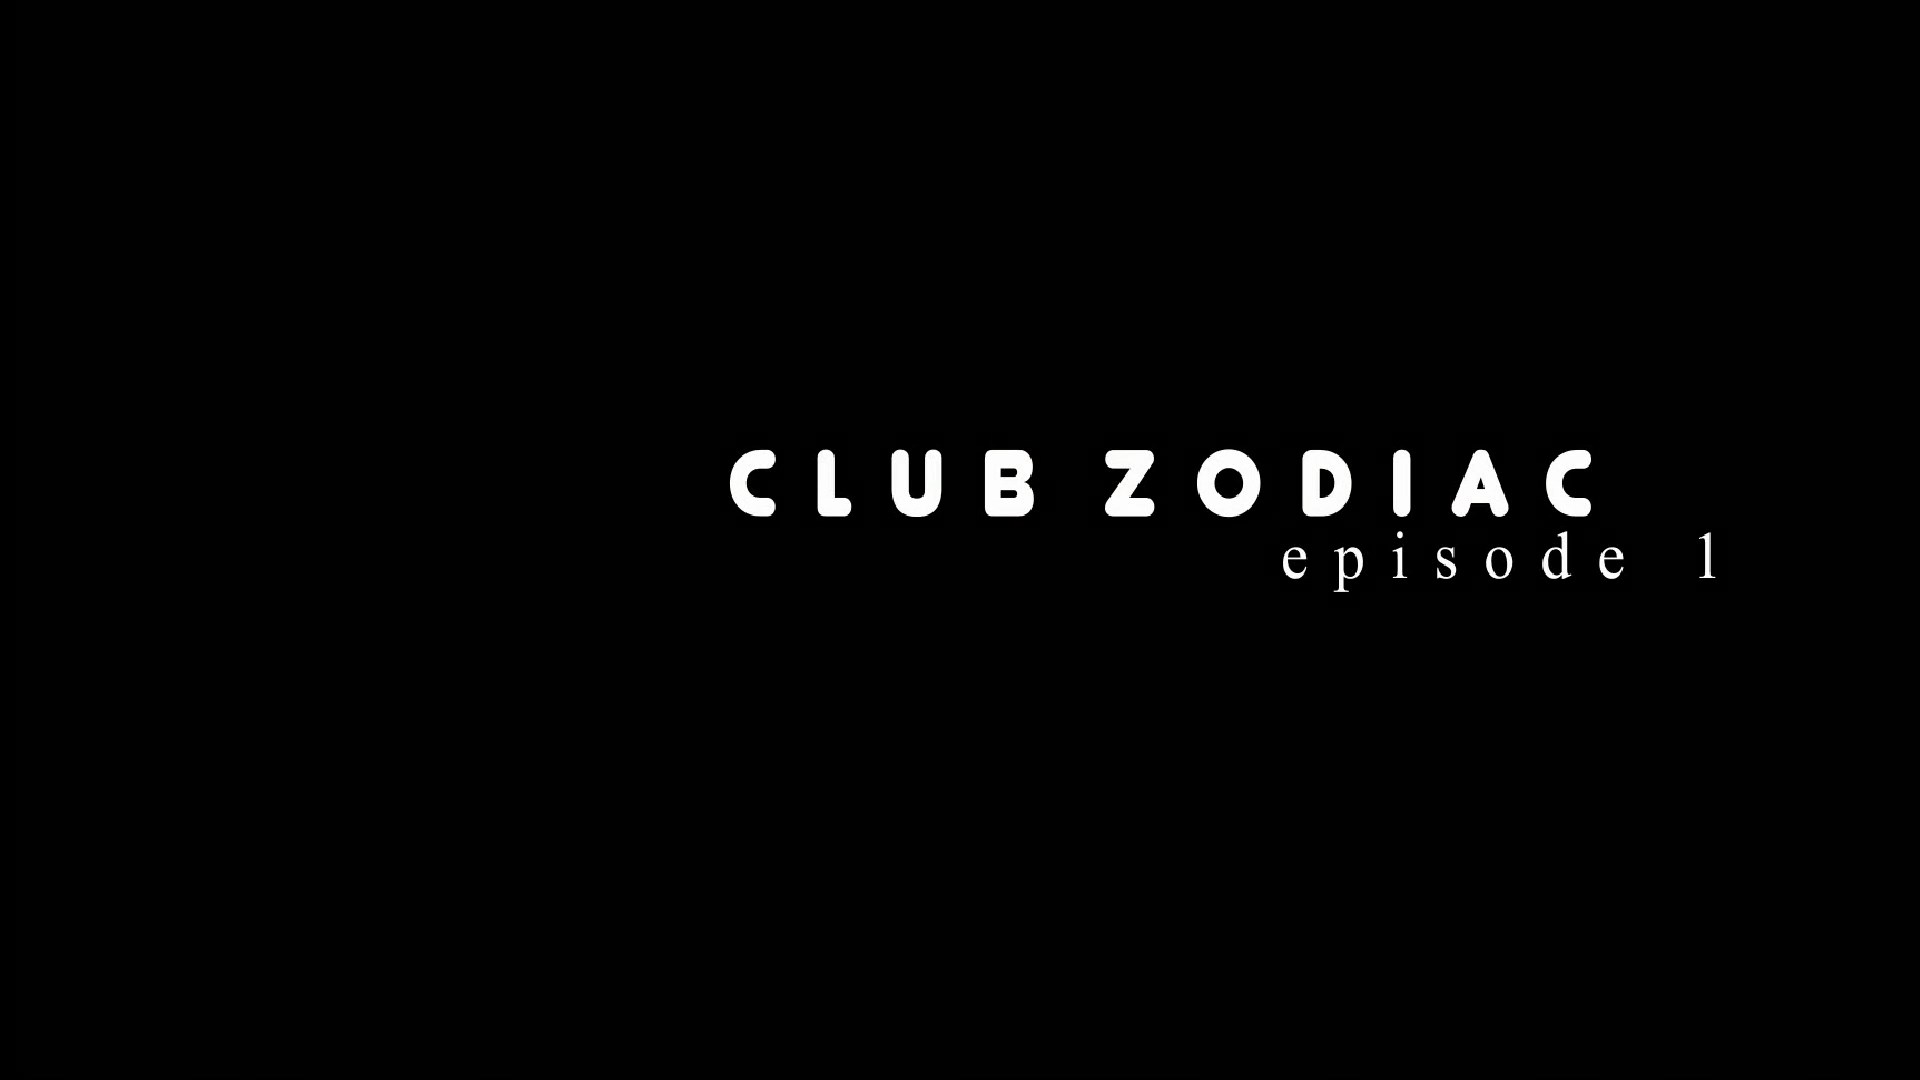 Club zodic